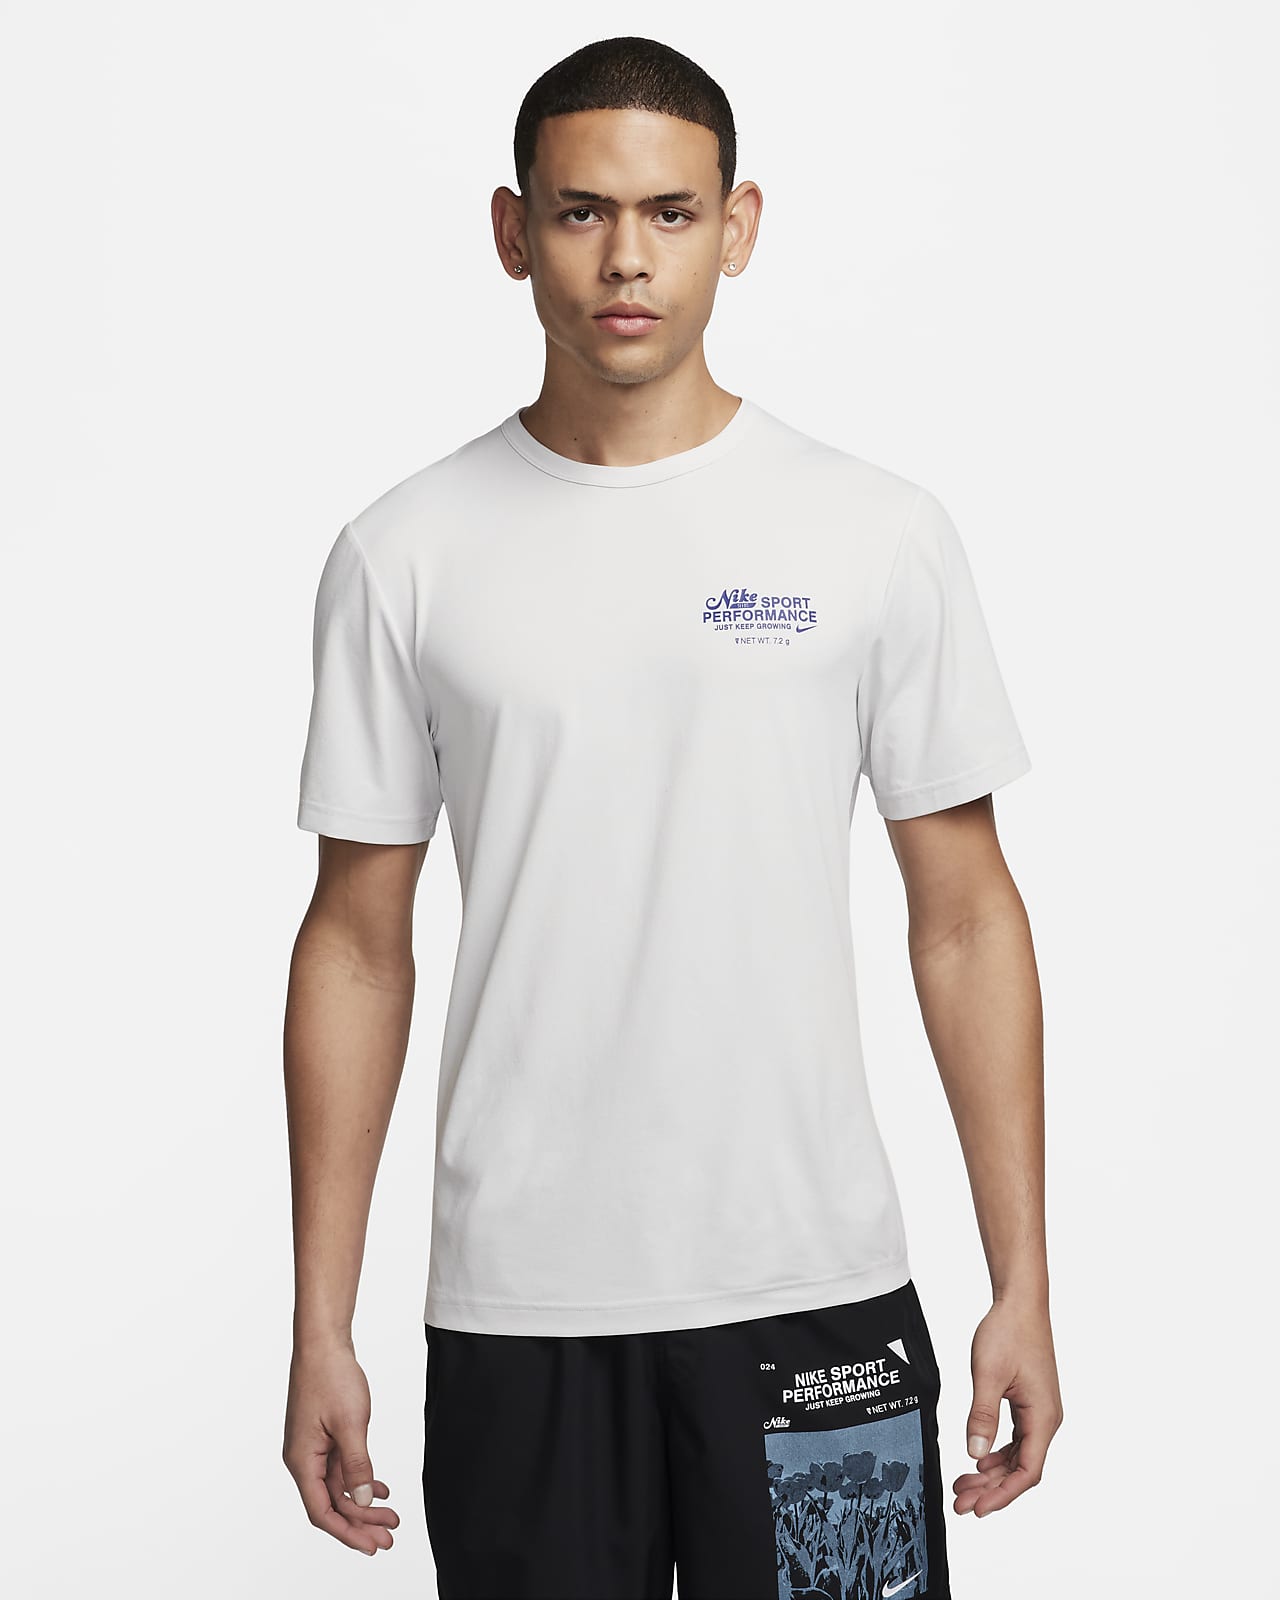 Nike Hyverse Camiseta de manga corta Dri-FIT versátil con